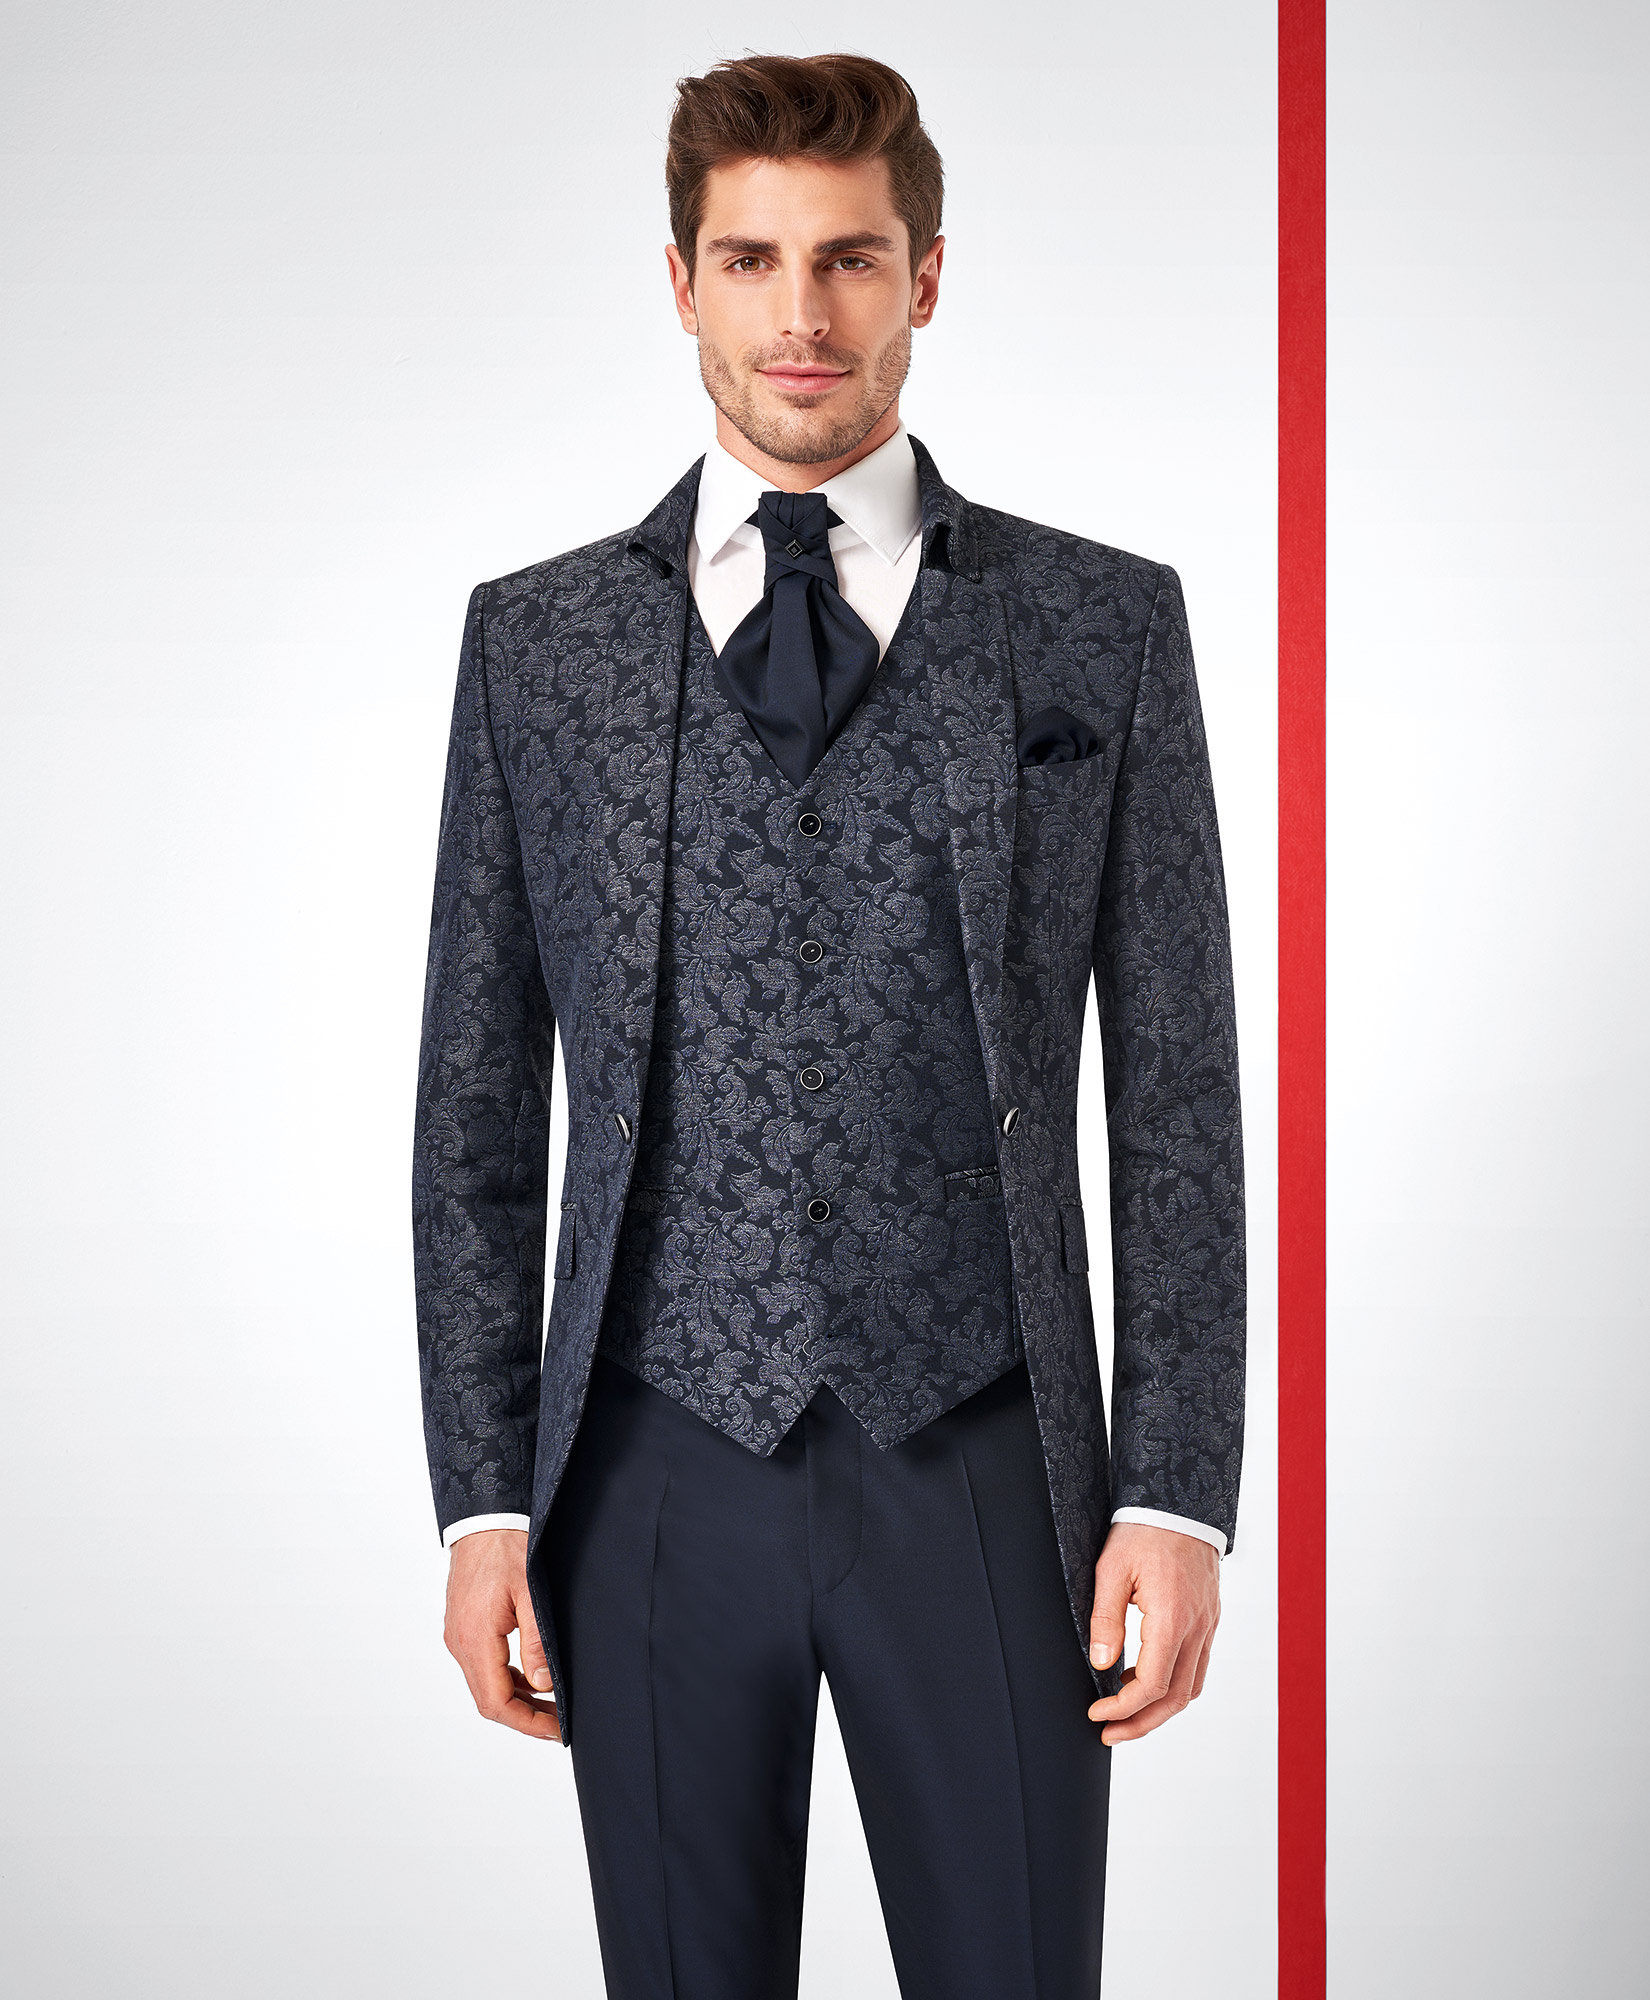 Tziacco Brocade Patterned 3 Piece Wedding Suit - Tom Murphy's Formal ...